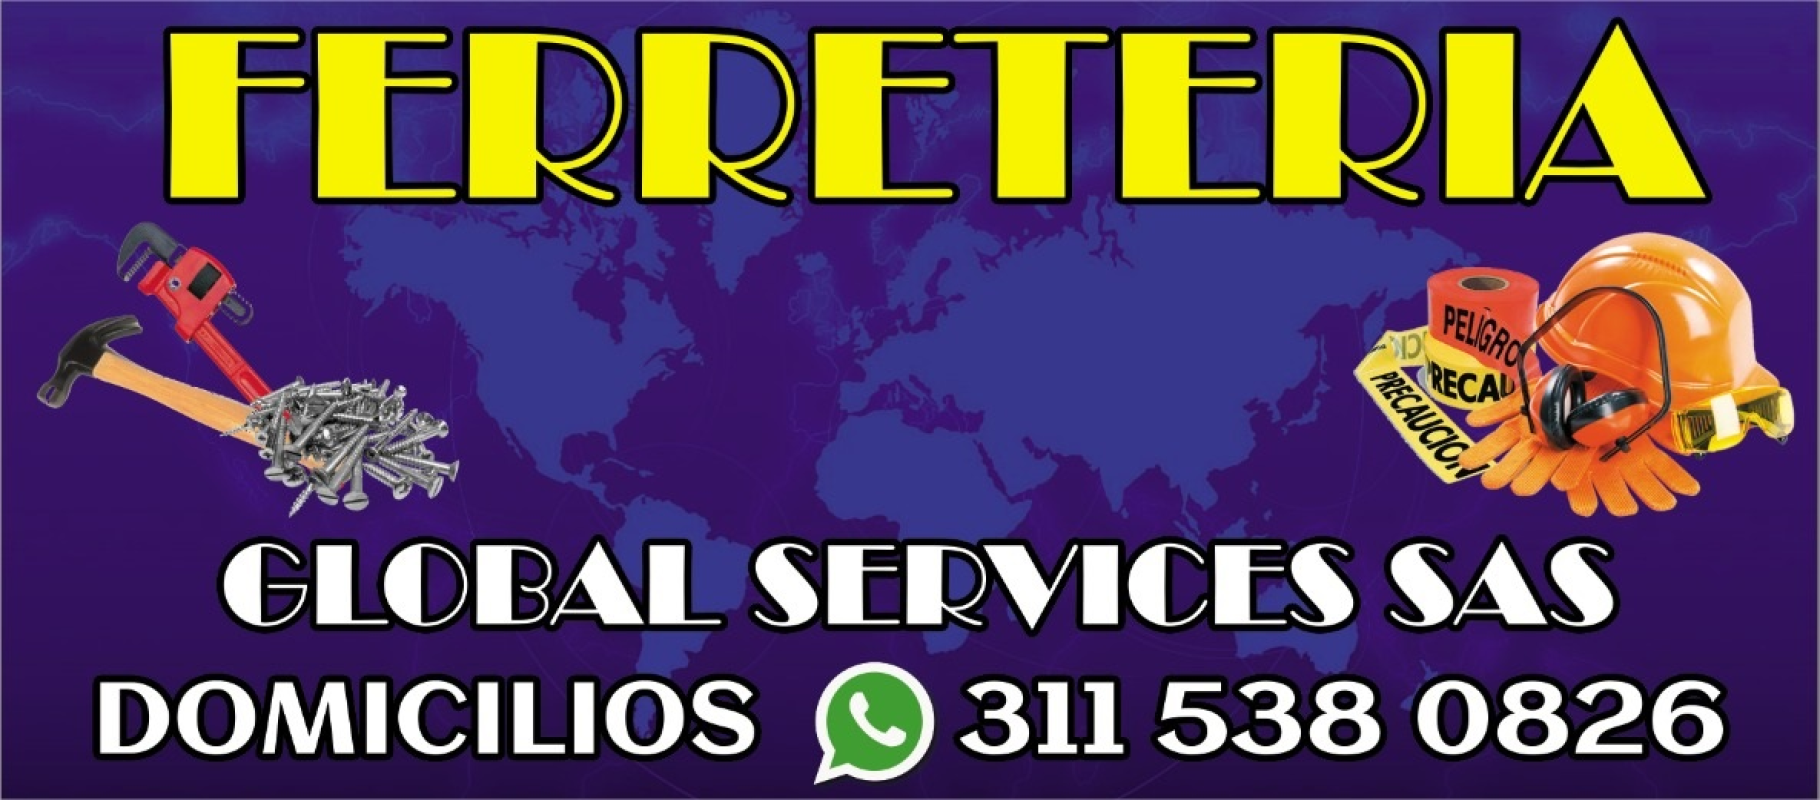 Ferretería Global Services S.A.S